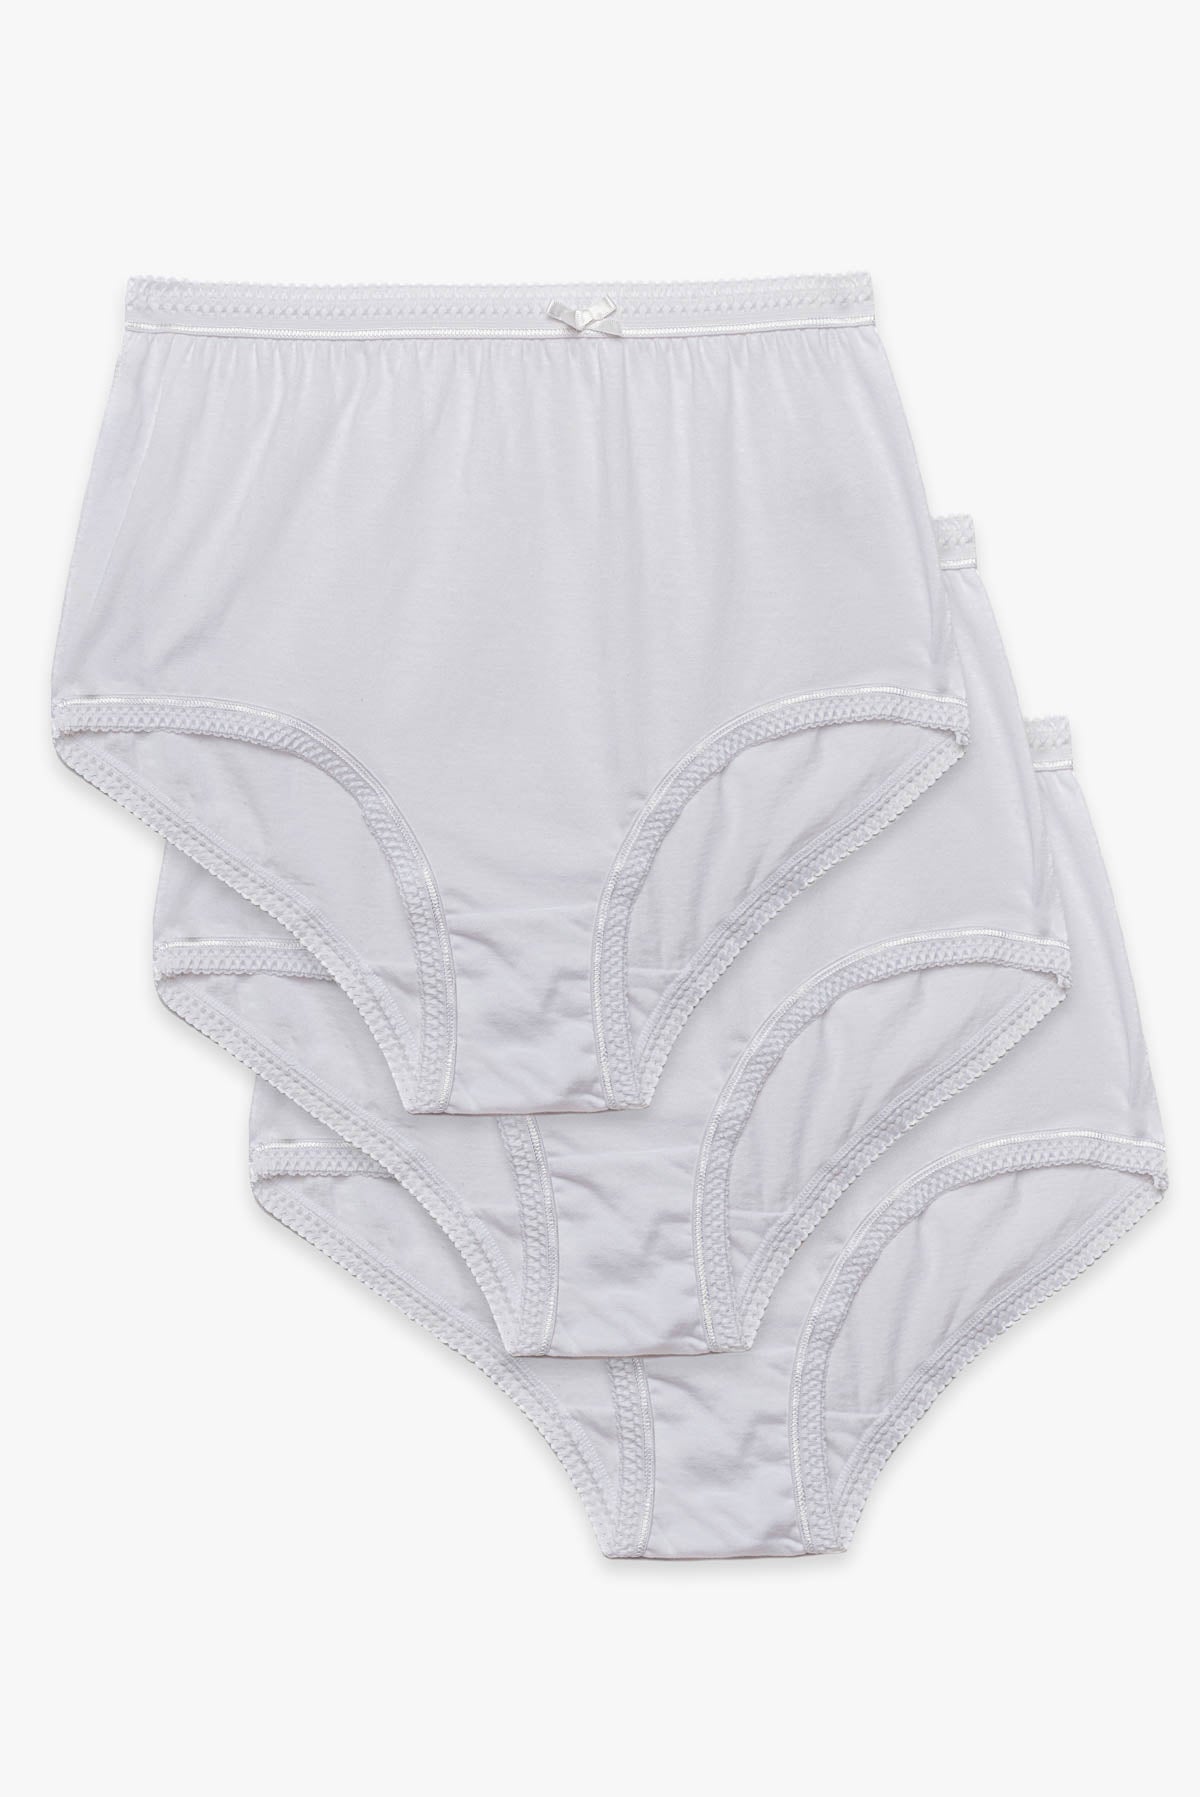 OQQ Women's 3 Pack Underwears Seamless Cotton Panties Underwears